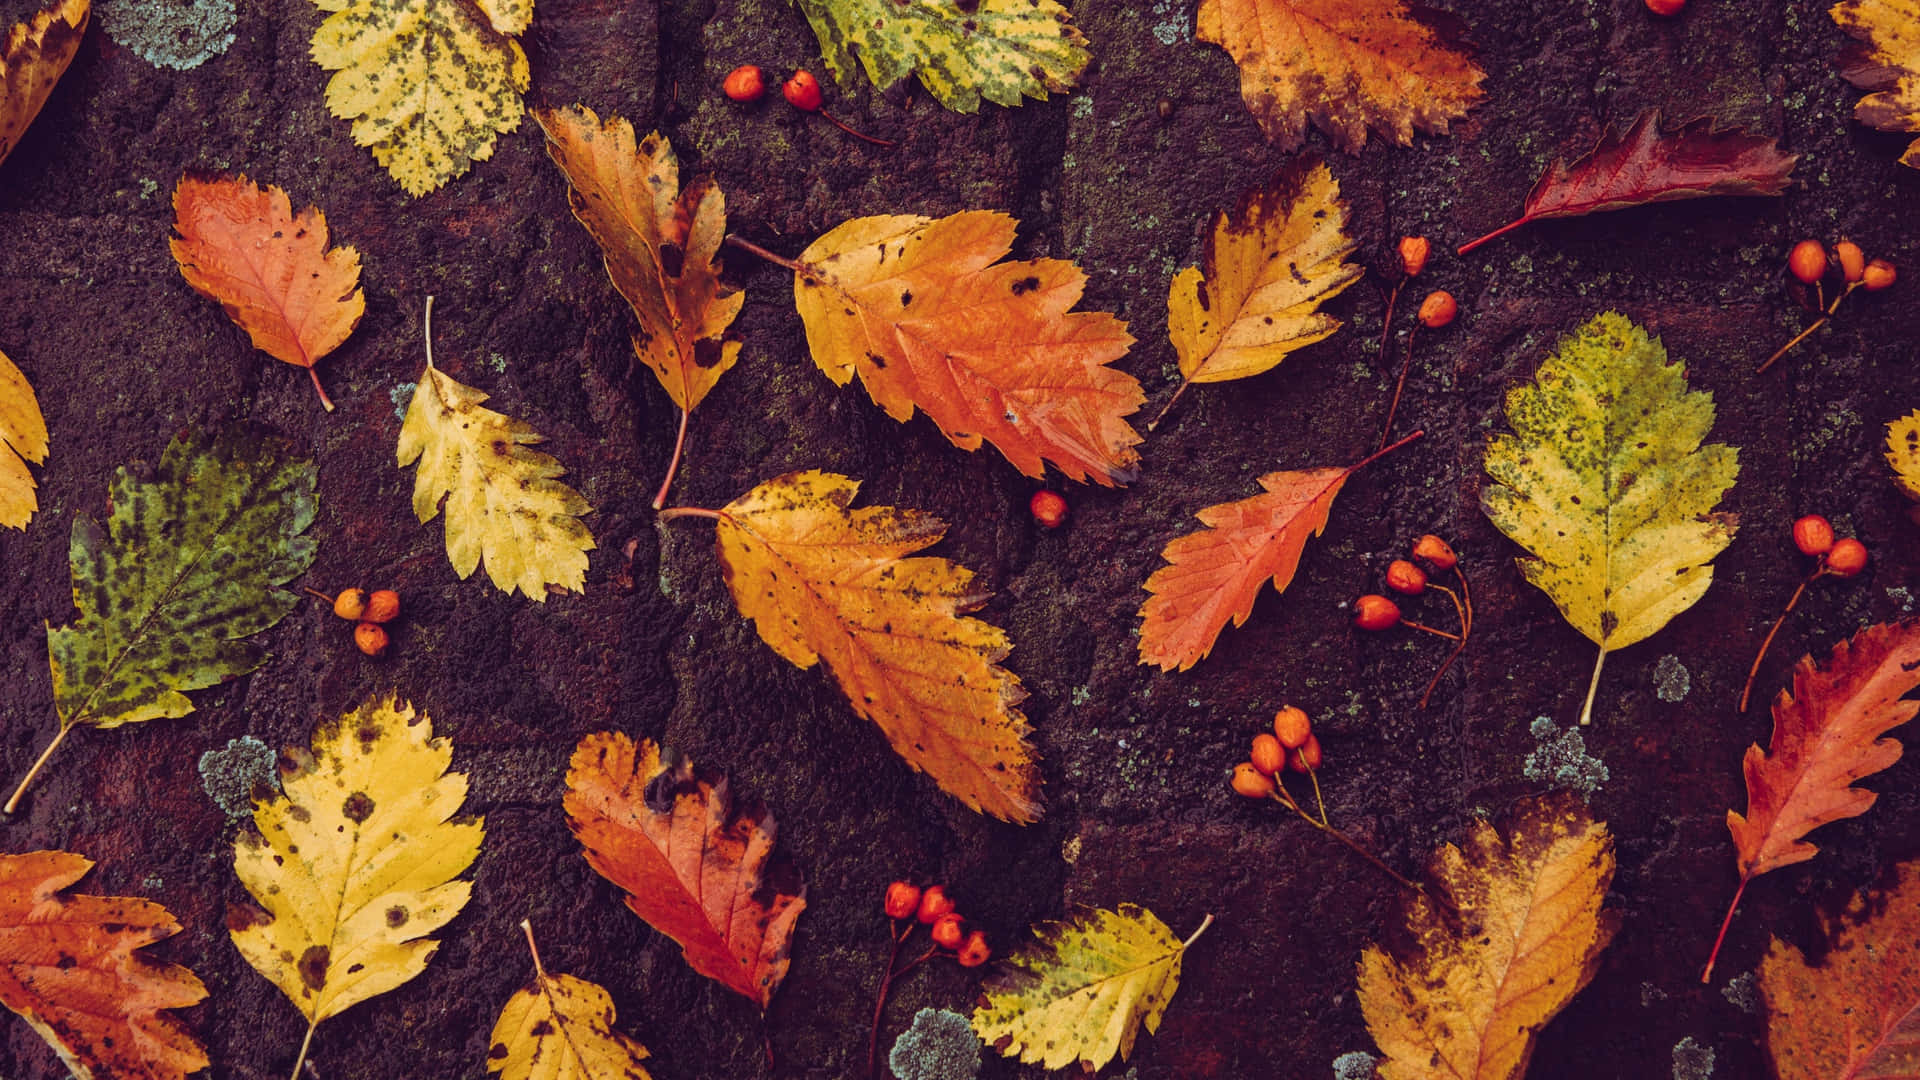 Autumn Leavesand Berries Texture Wallpaper